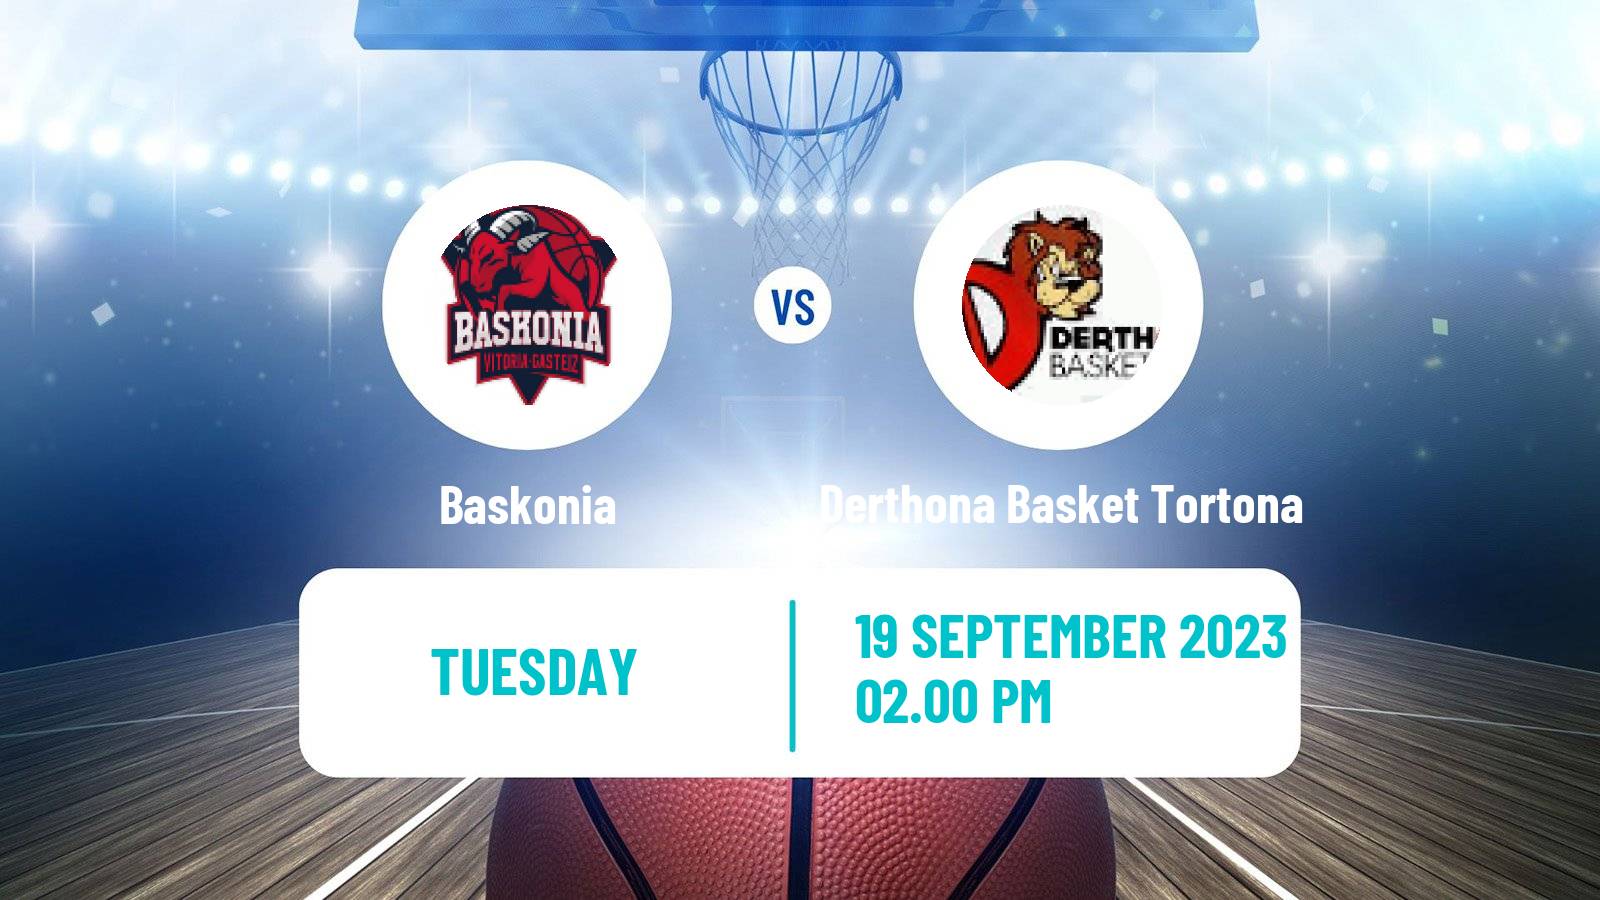 Basketball Club Friendly Basketball Baskonia - Derthona Basket Tortona